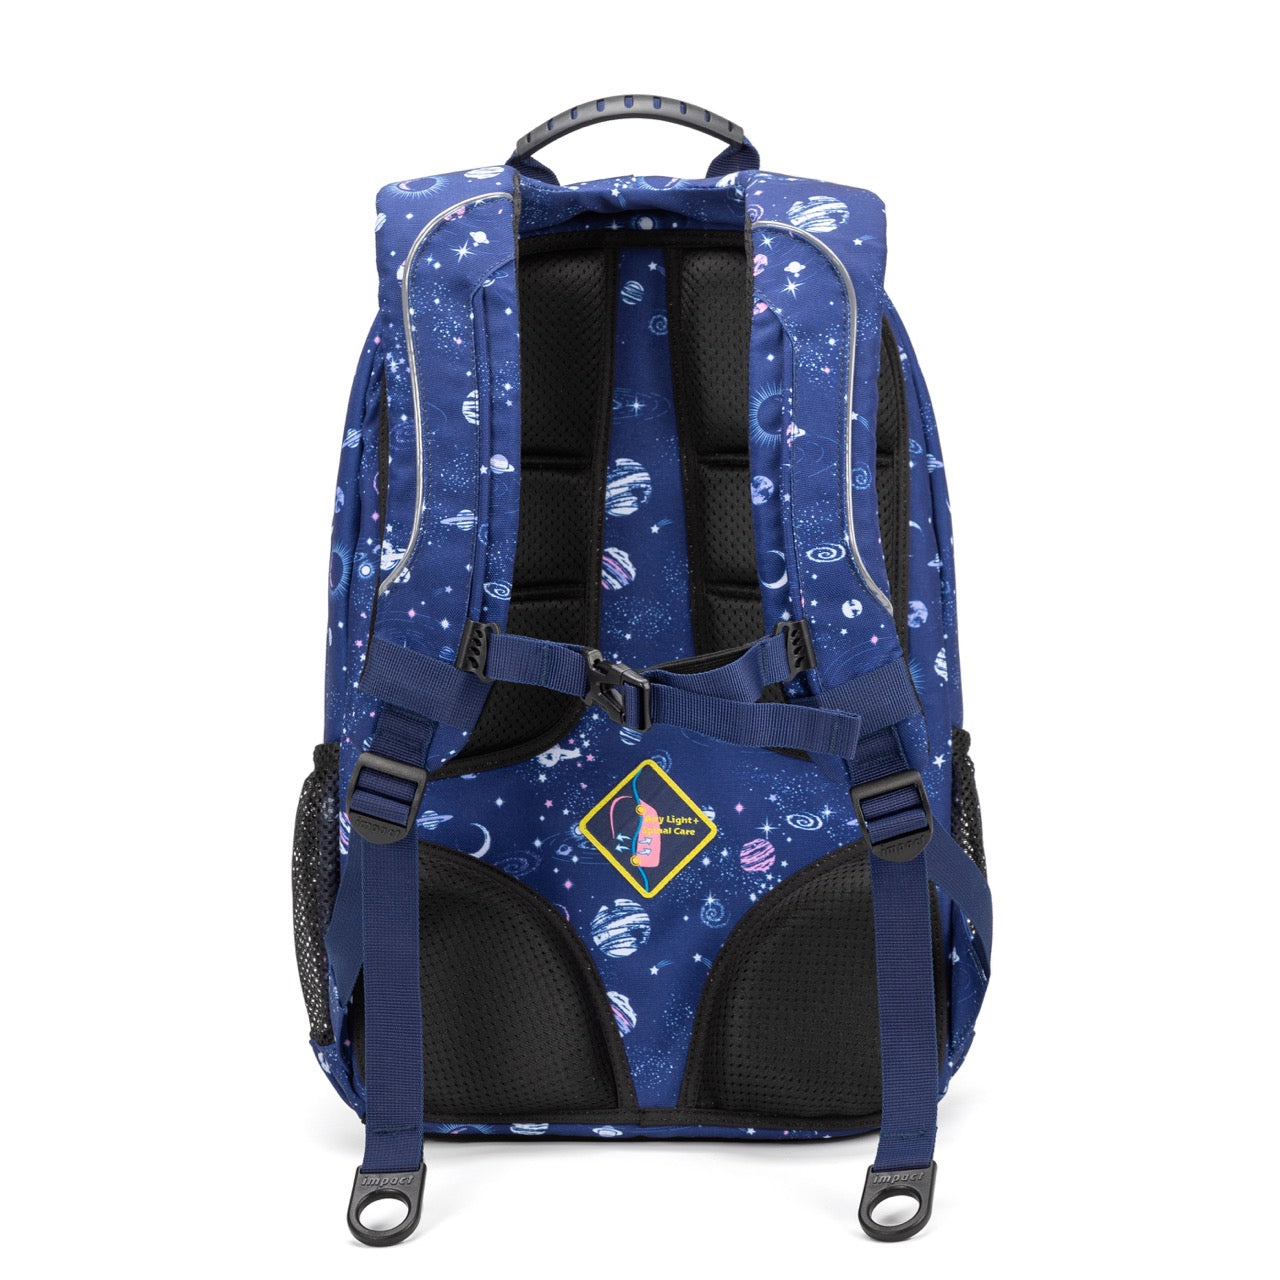 Impact School Bag IPEG-158 - Ergo-Comfort Spinal Support Primary Secondary School Backpack (Popular Colors)